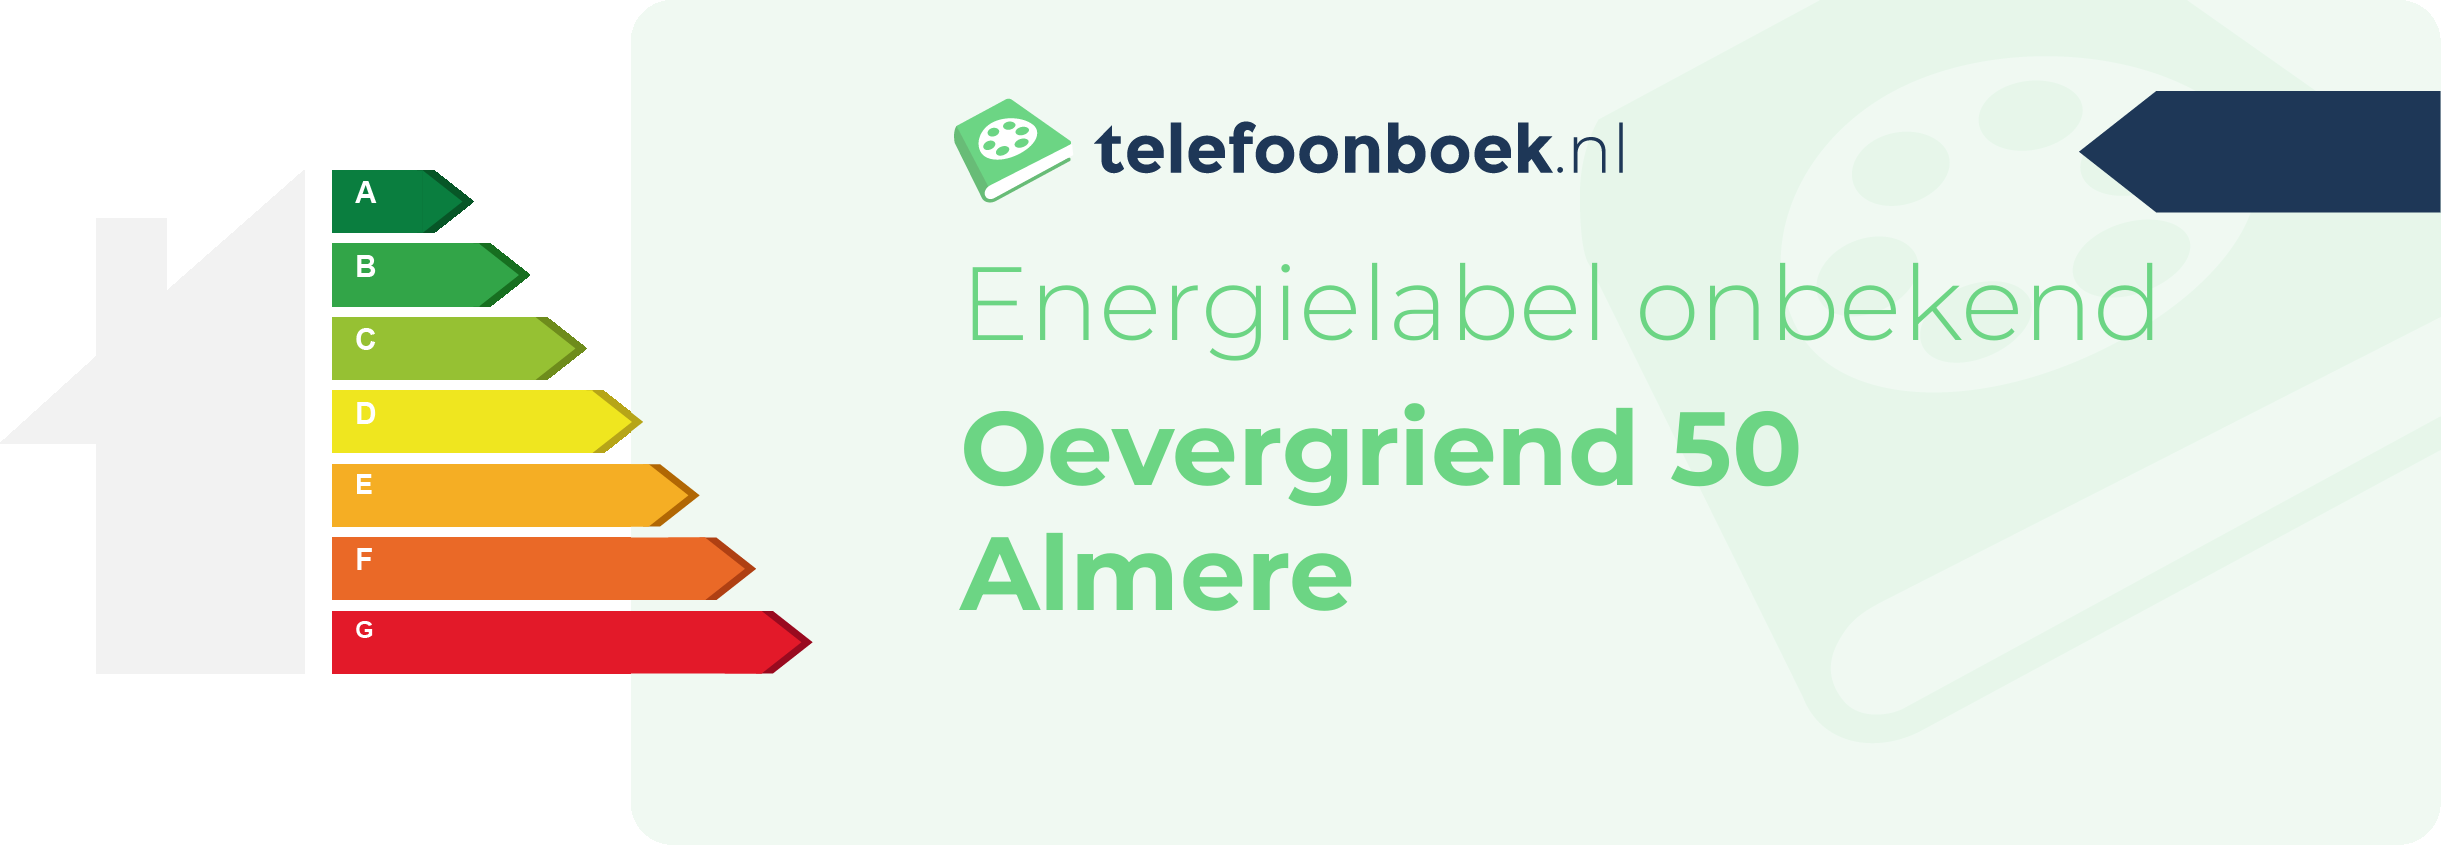 Energielabel Oevergriend 50 Almere